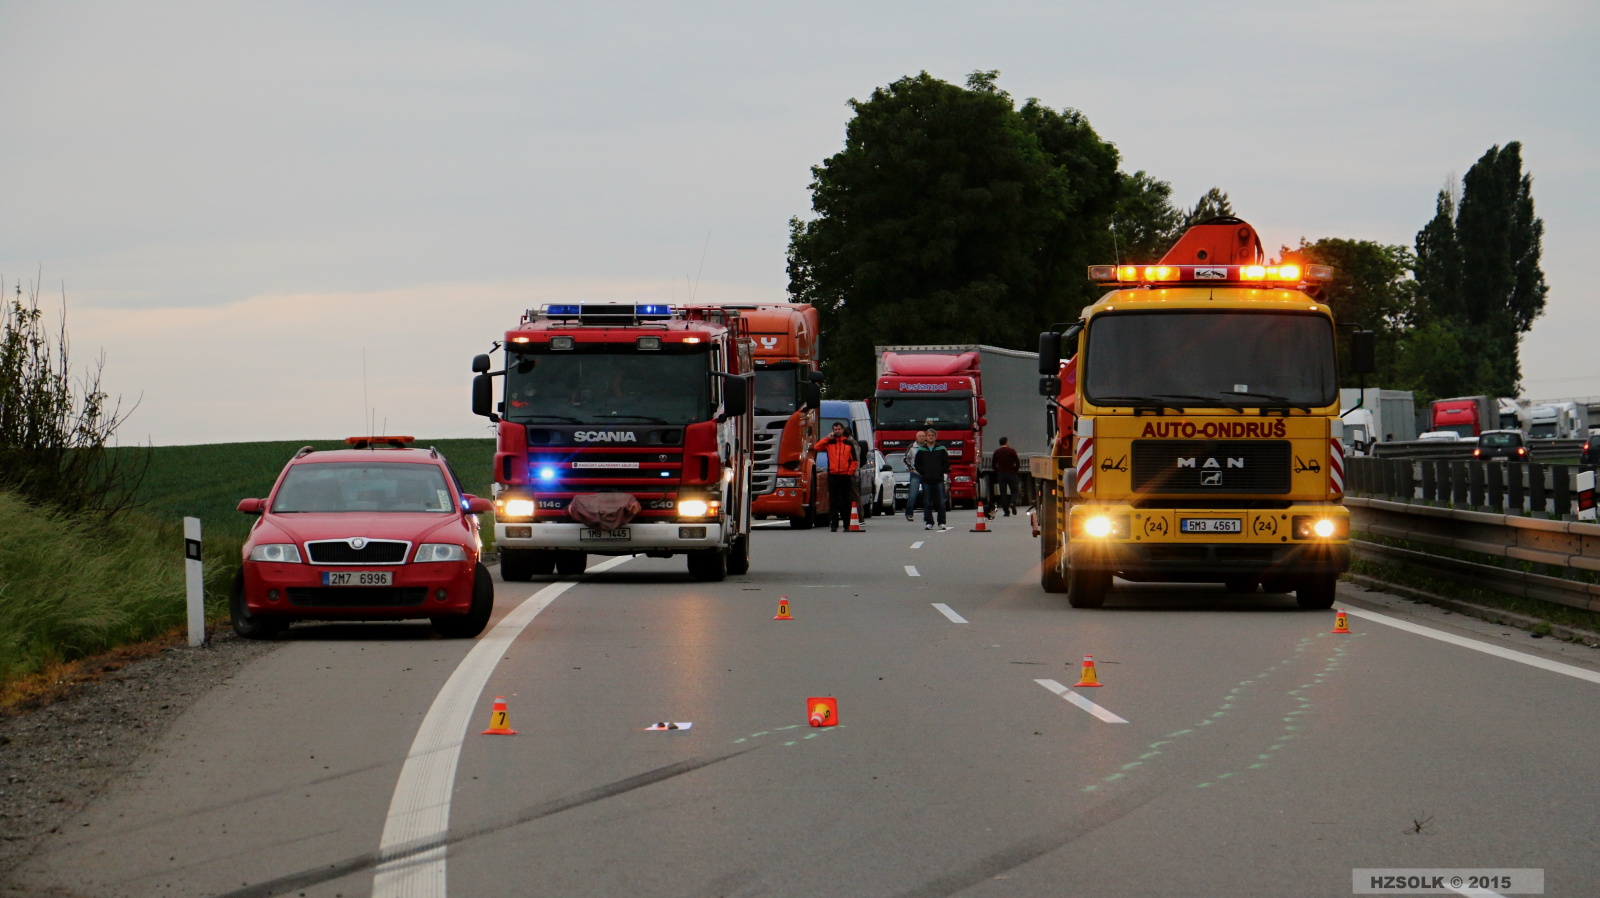 8 21-5-2015 DN nehoda dvou osobních vozidel (8).JPG